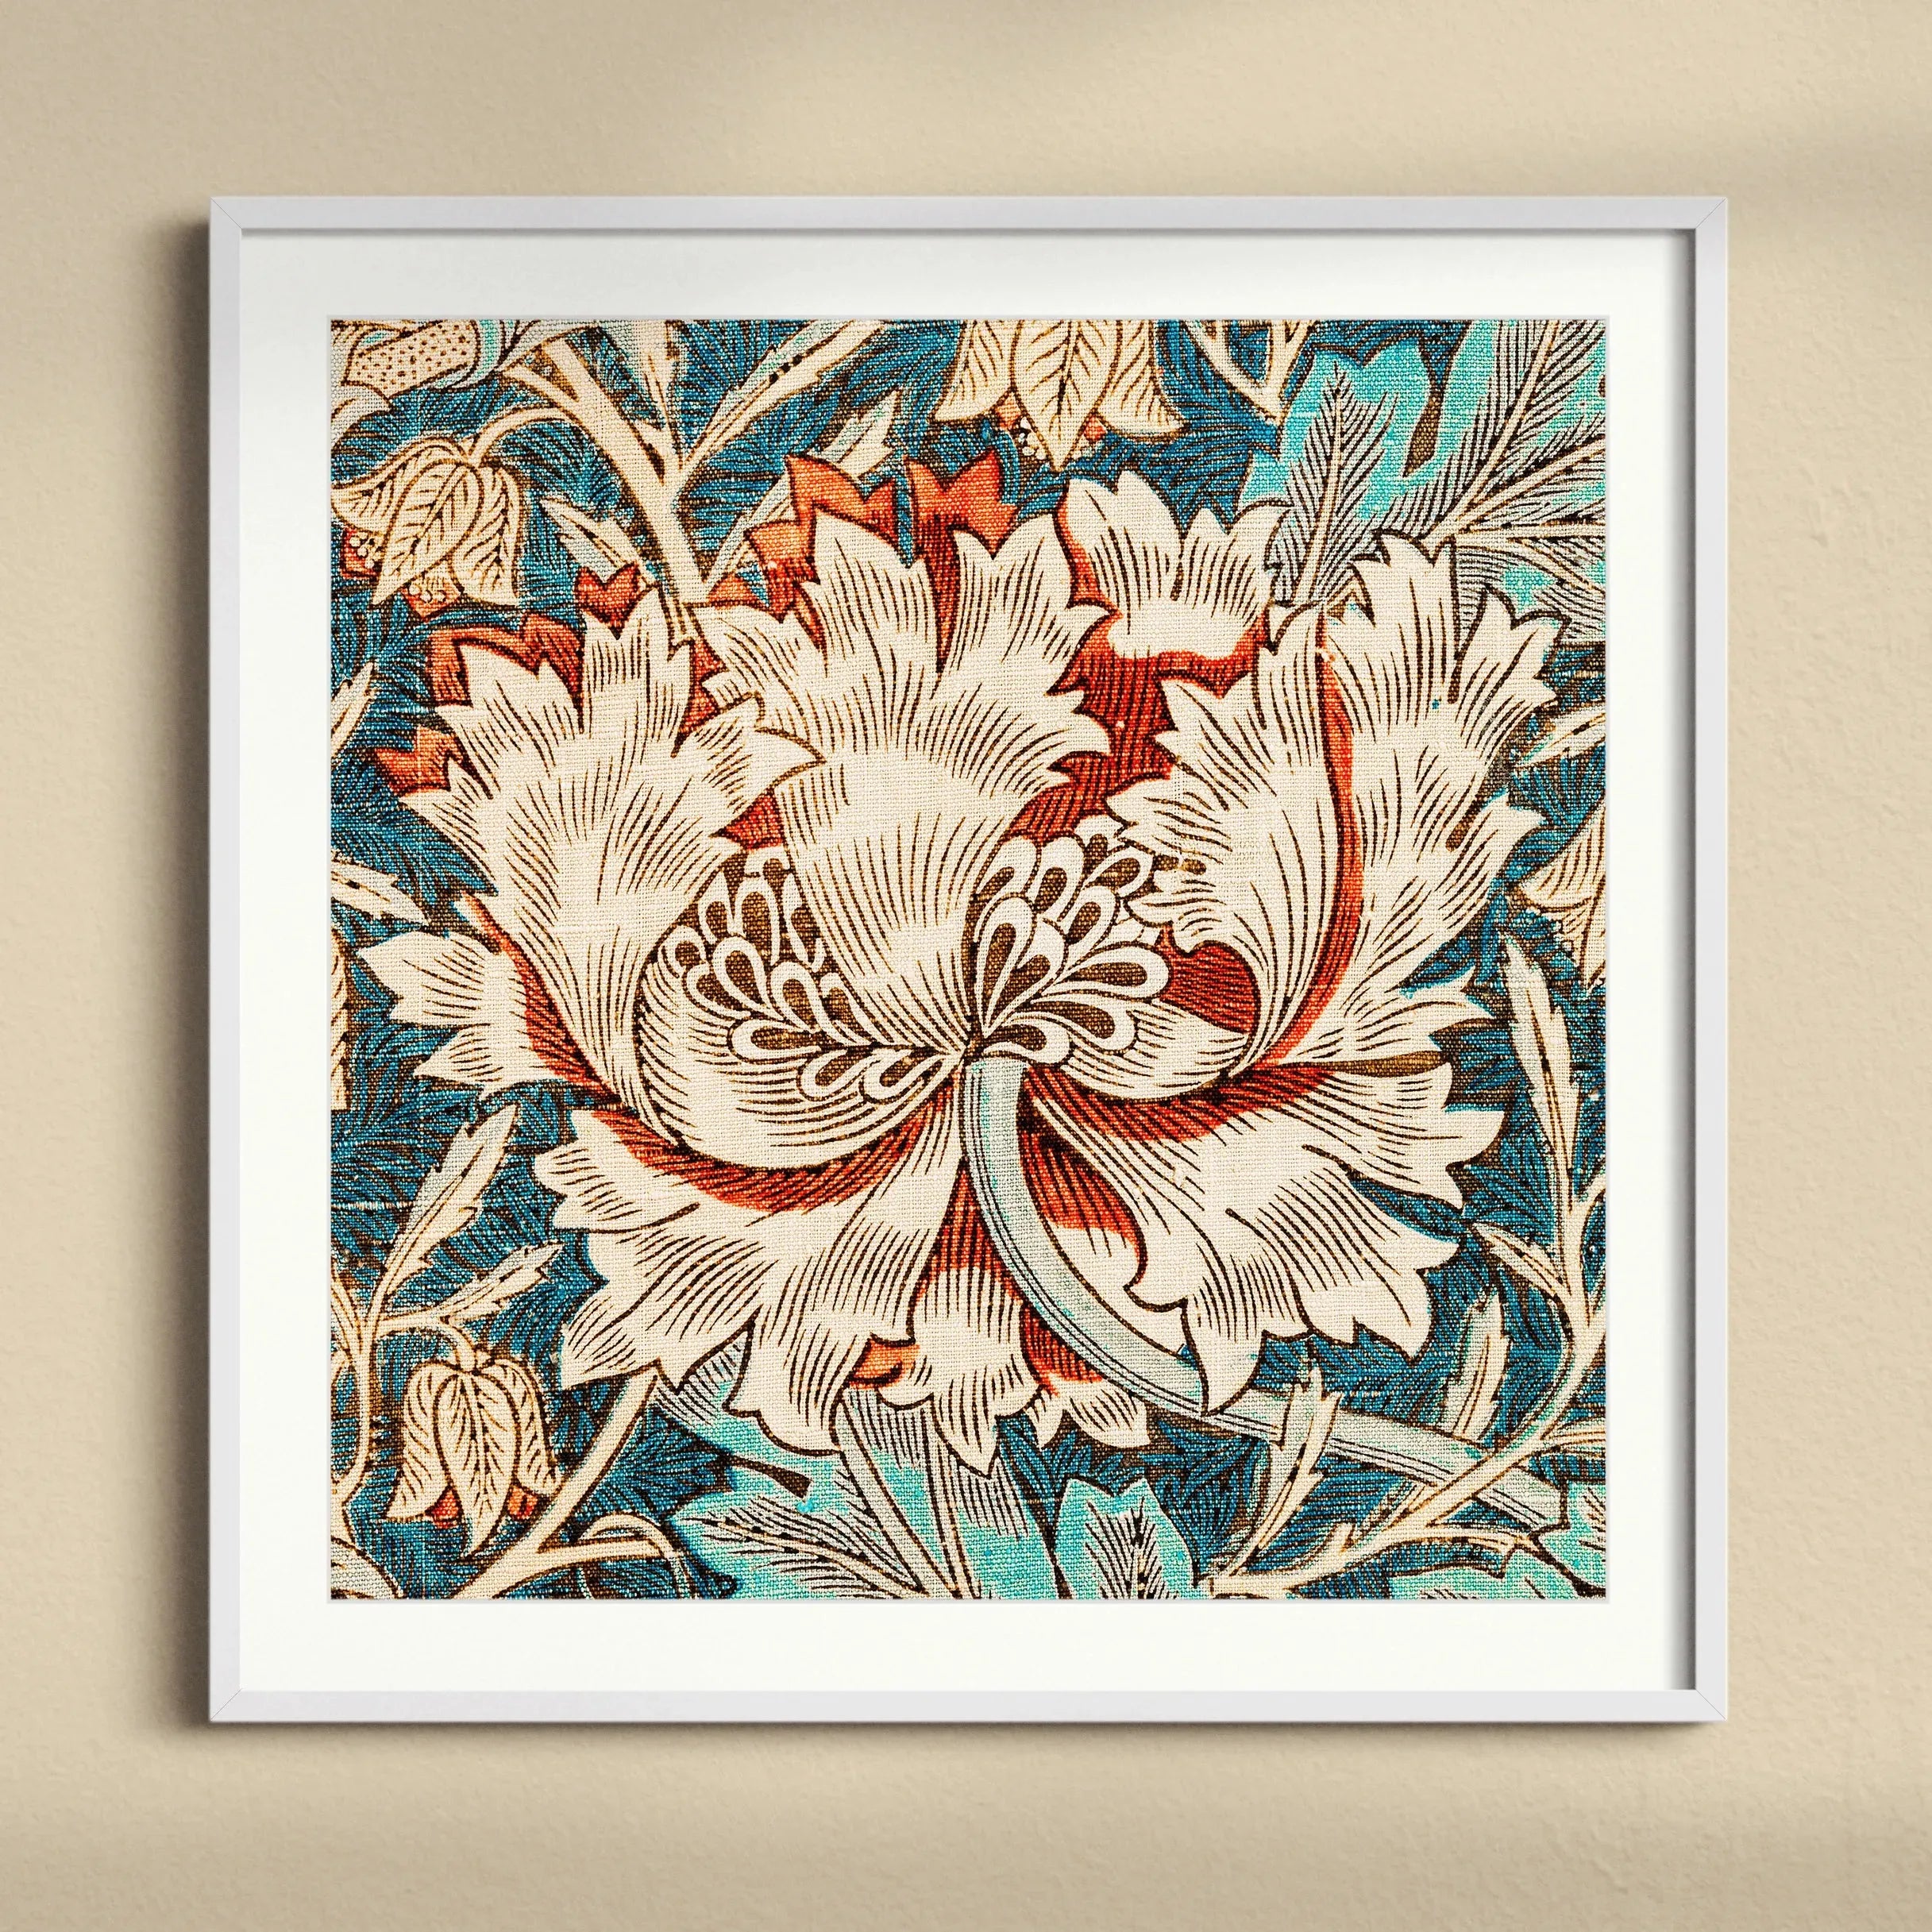 Honeysuckle Too - William Morris Arts & Crafts Framed Print - 12’x12’ / White Frame - Posters Prints & Visual